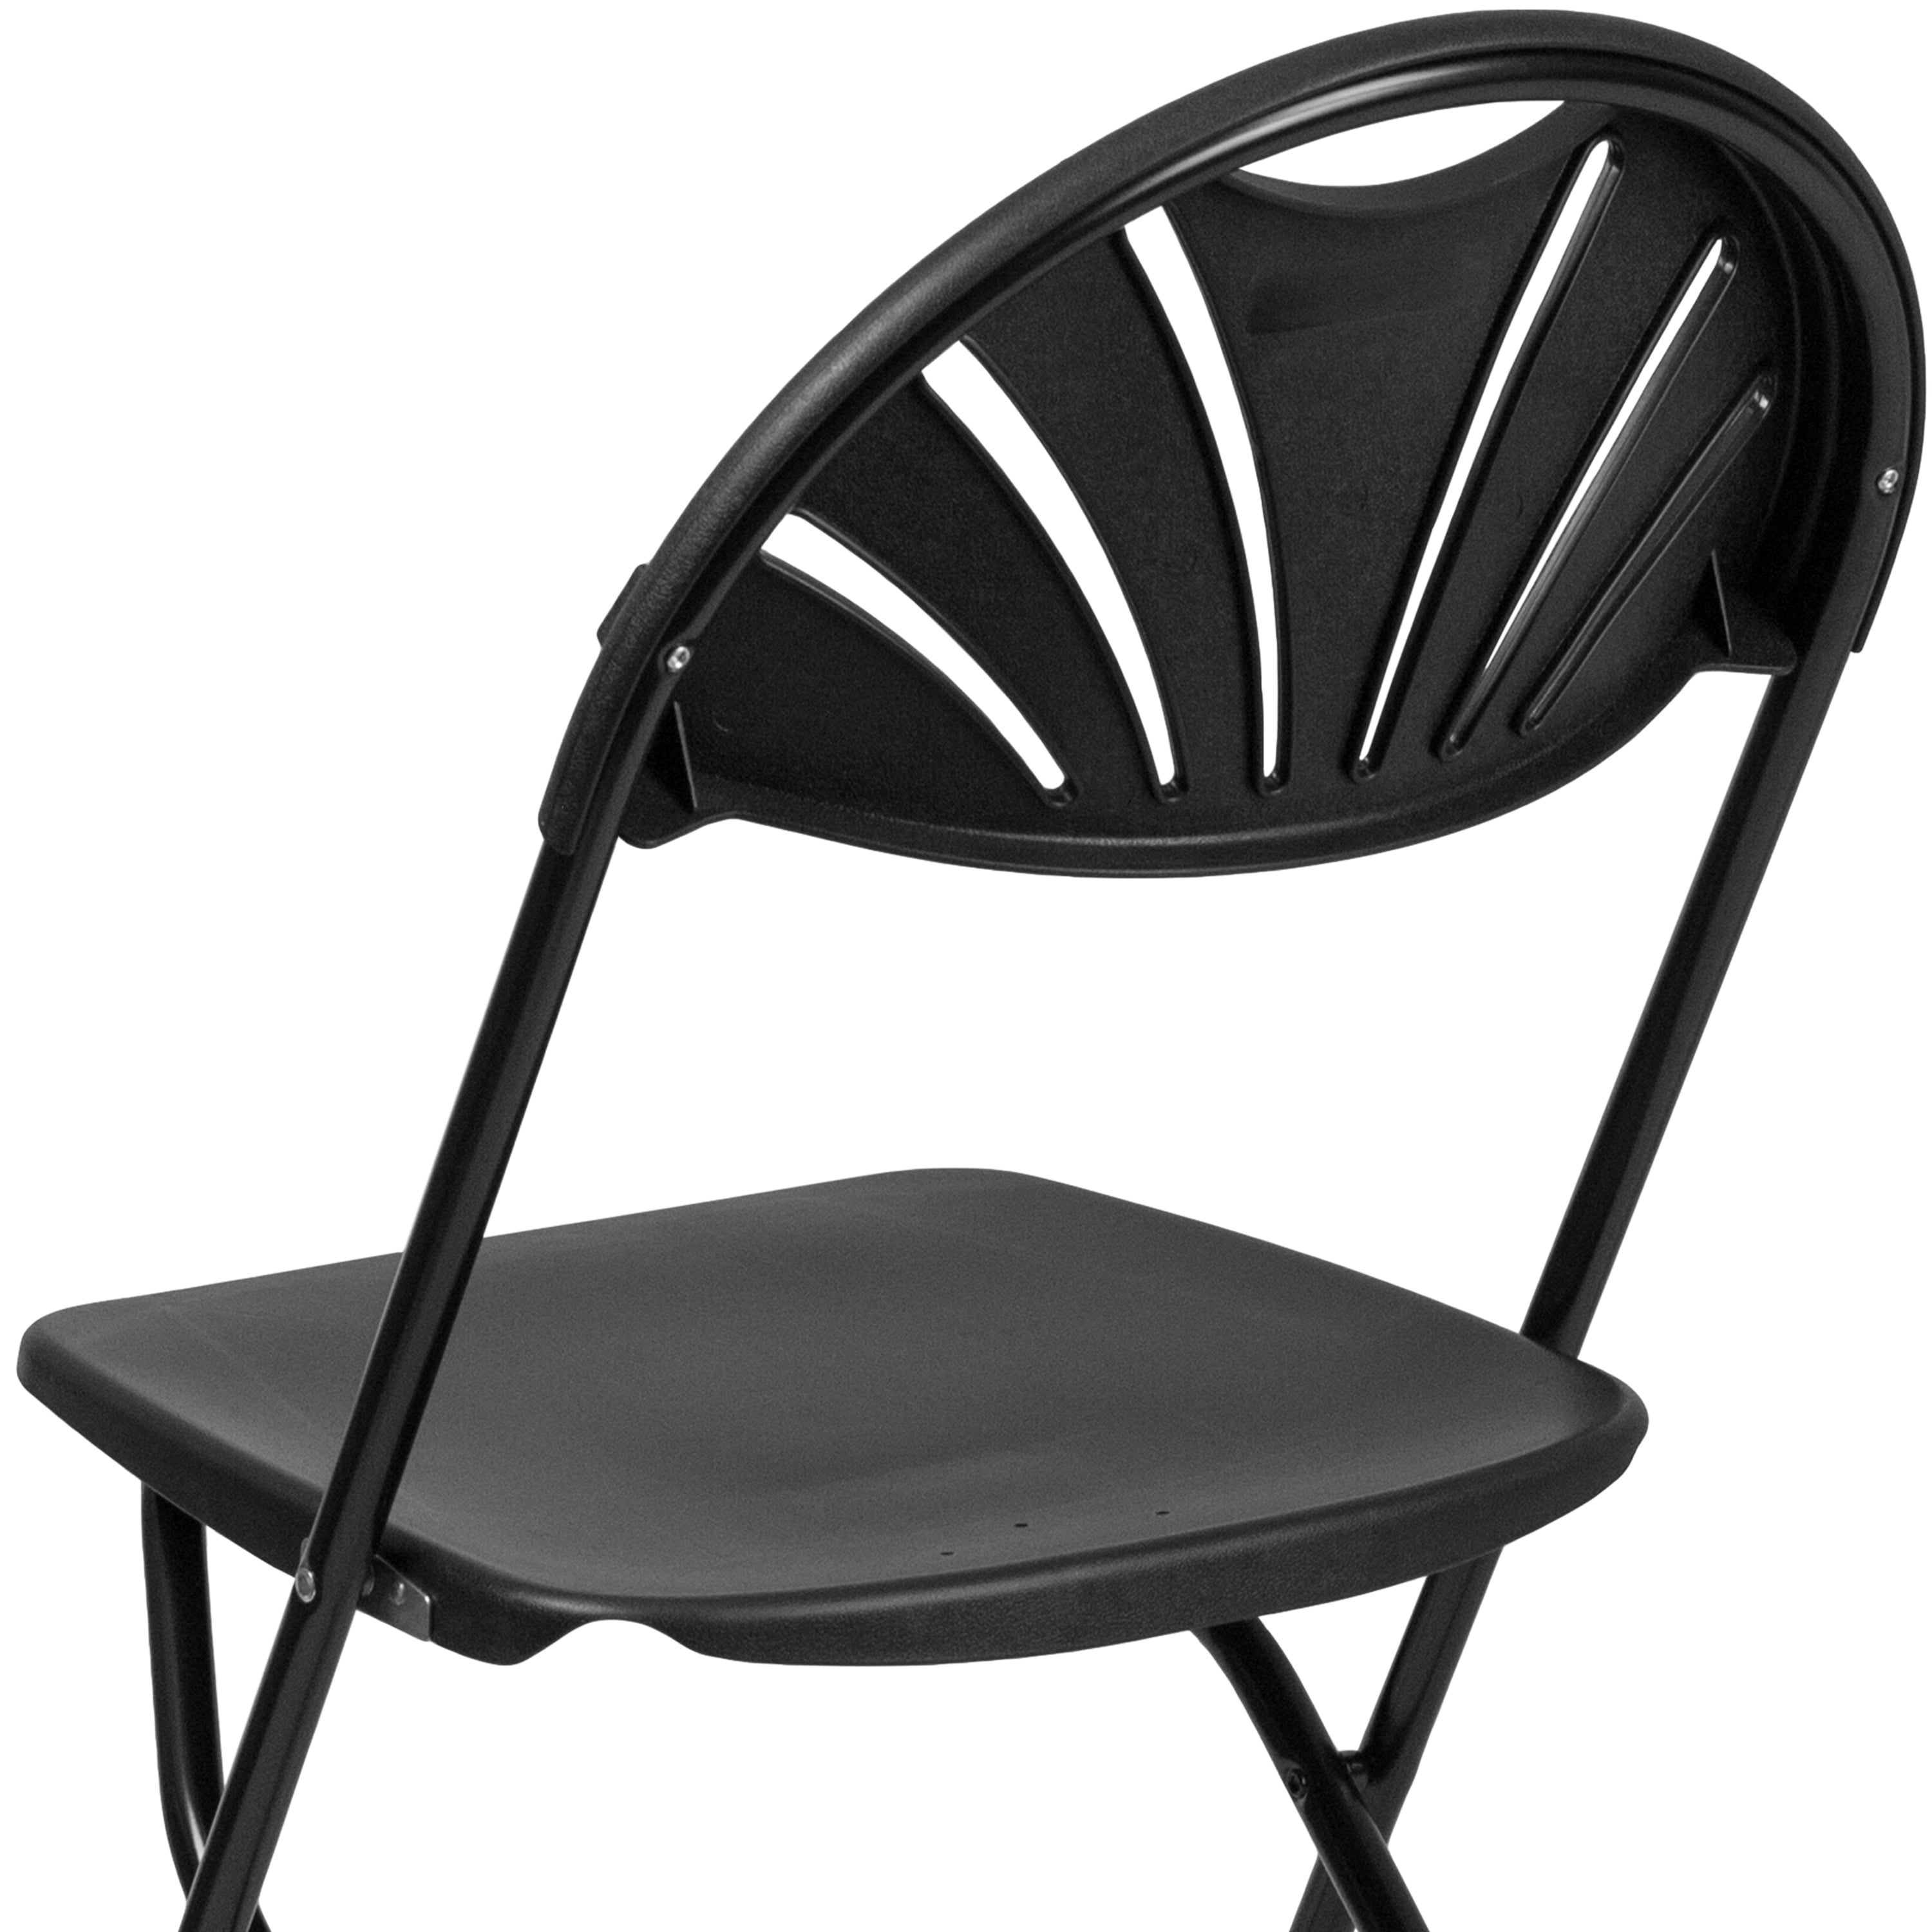 Details about   HERCULES Series 650 lb Capacity Black Plastic Fan Back Folding Chair 